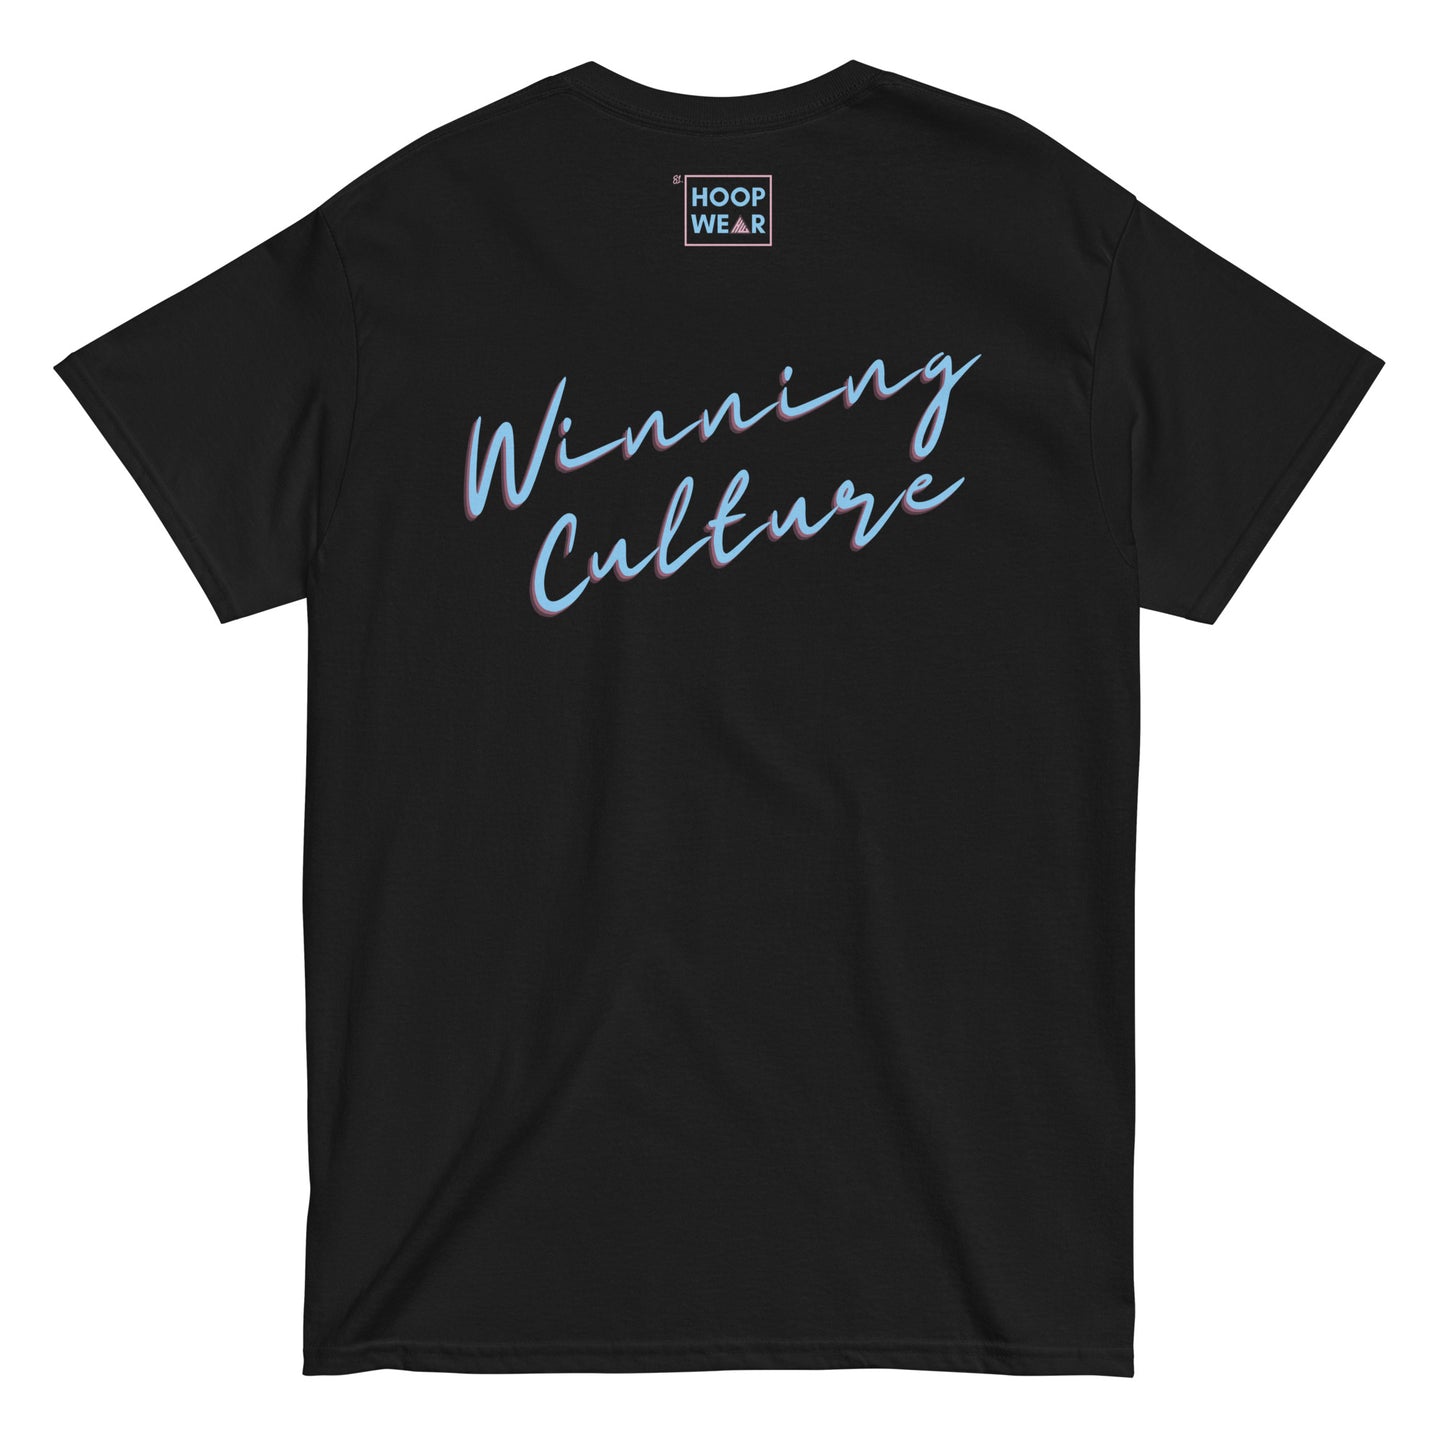 “Winning Culture” T-shirt - Black